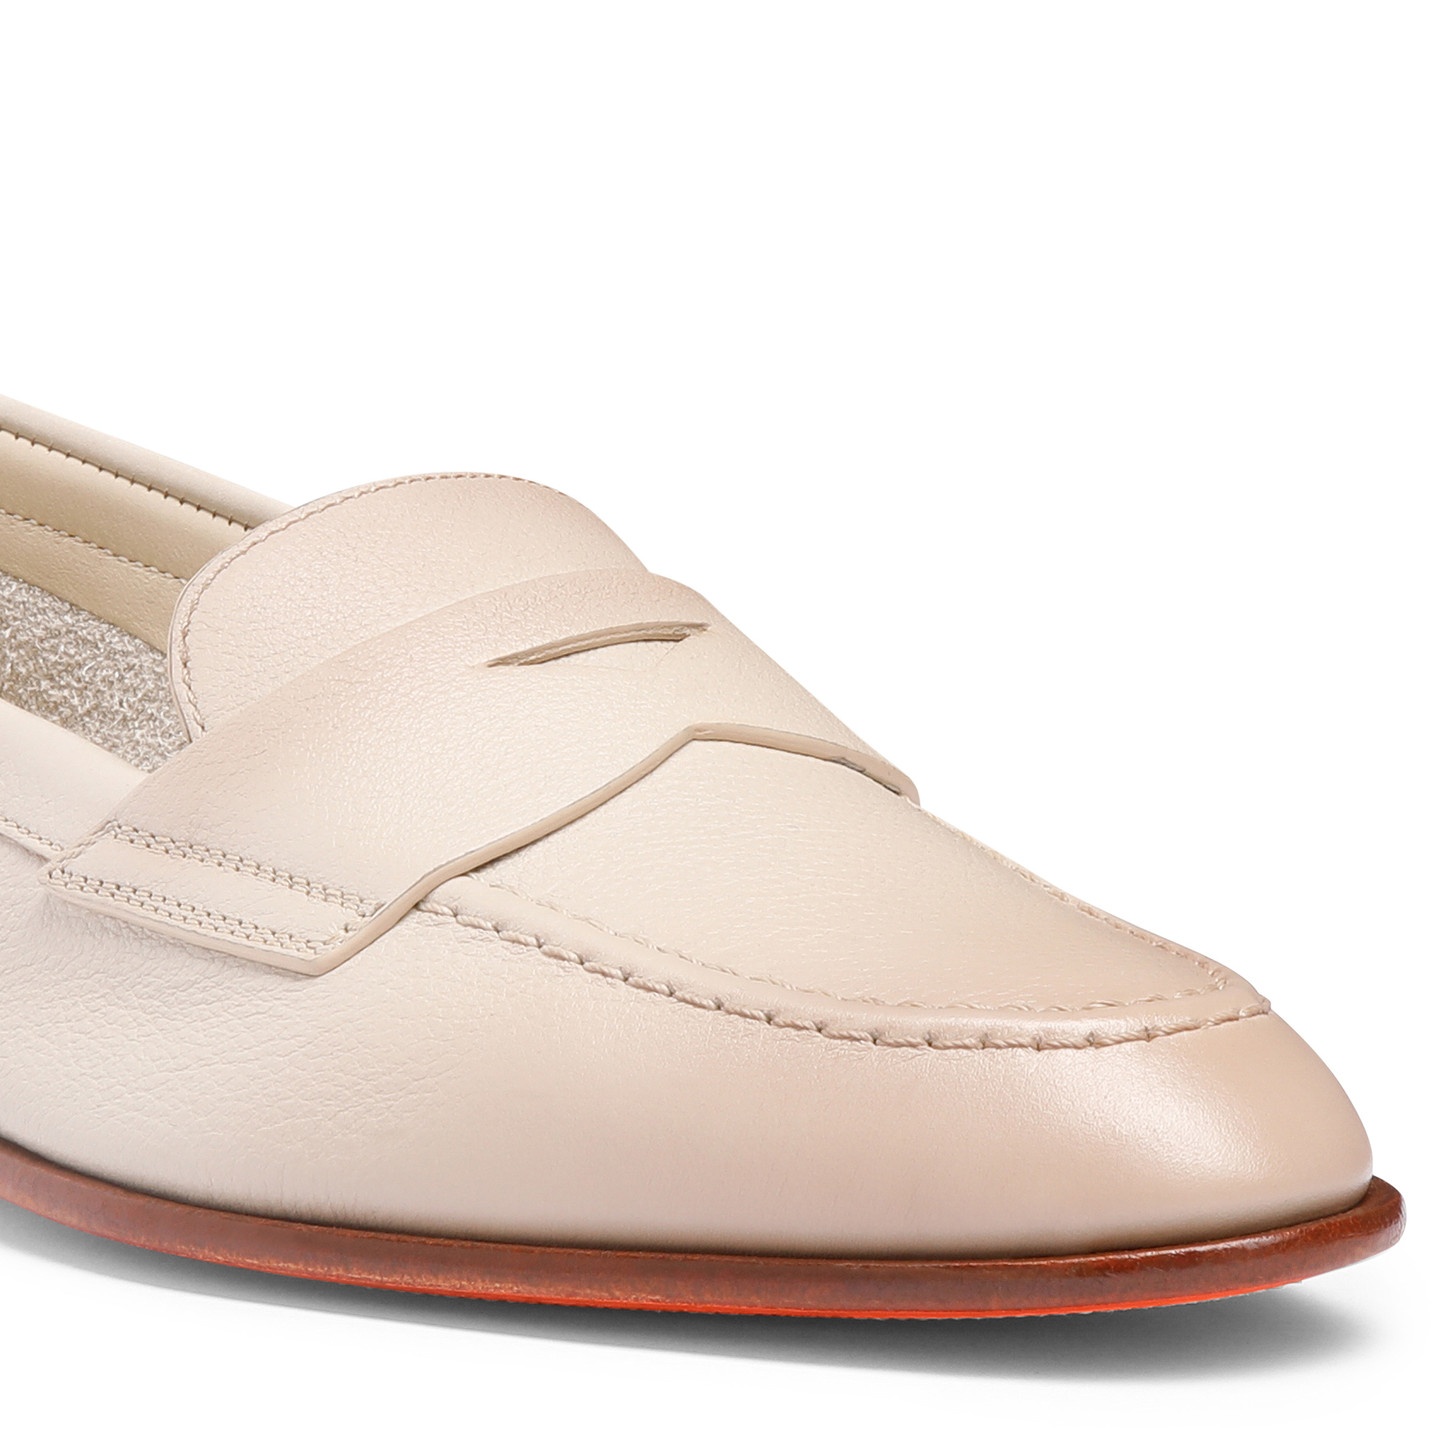 Women's beige leather penny loafer - 6